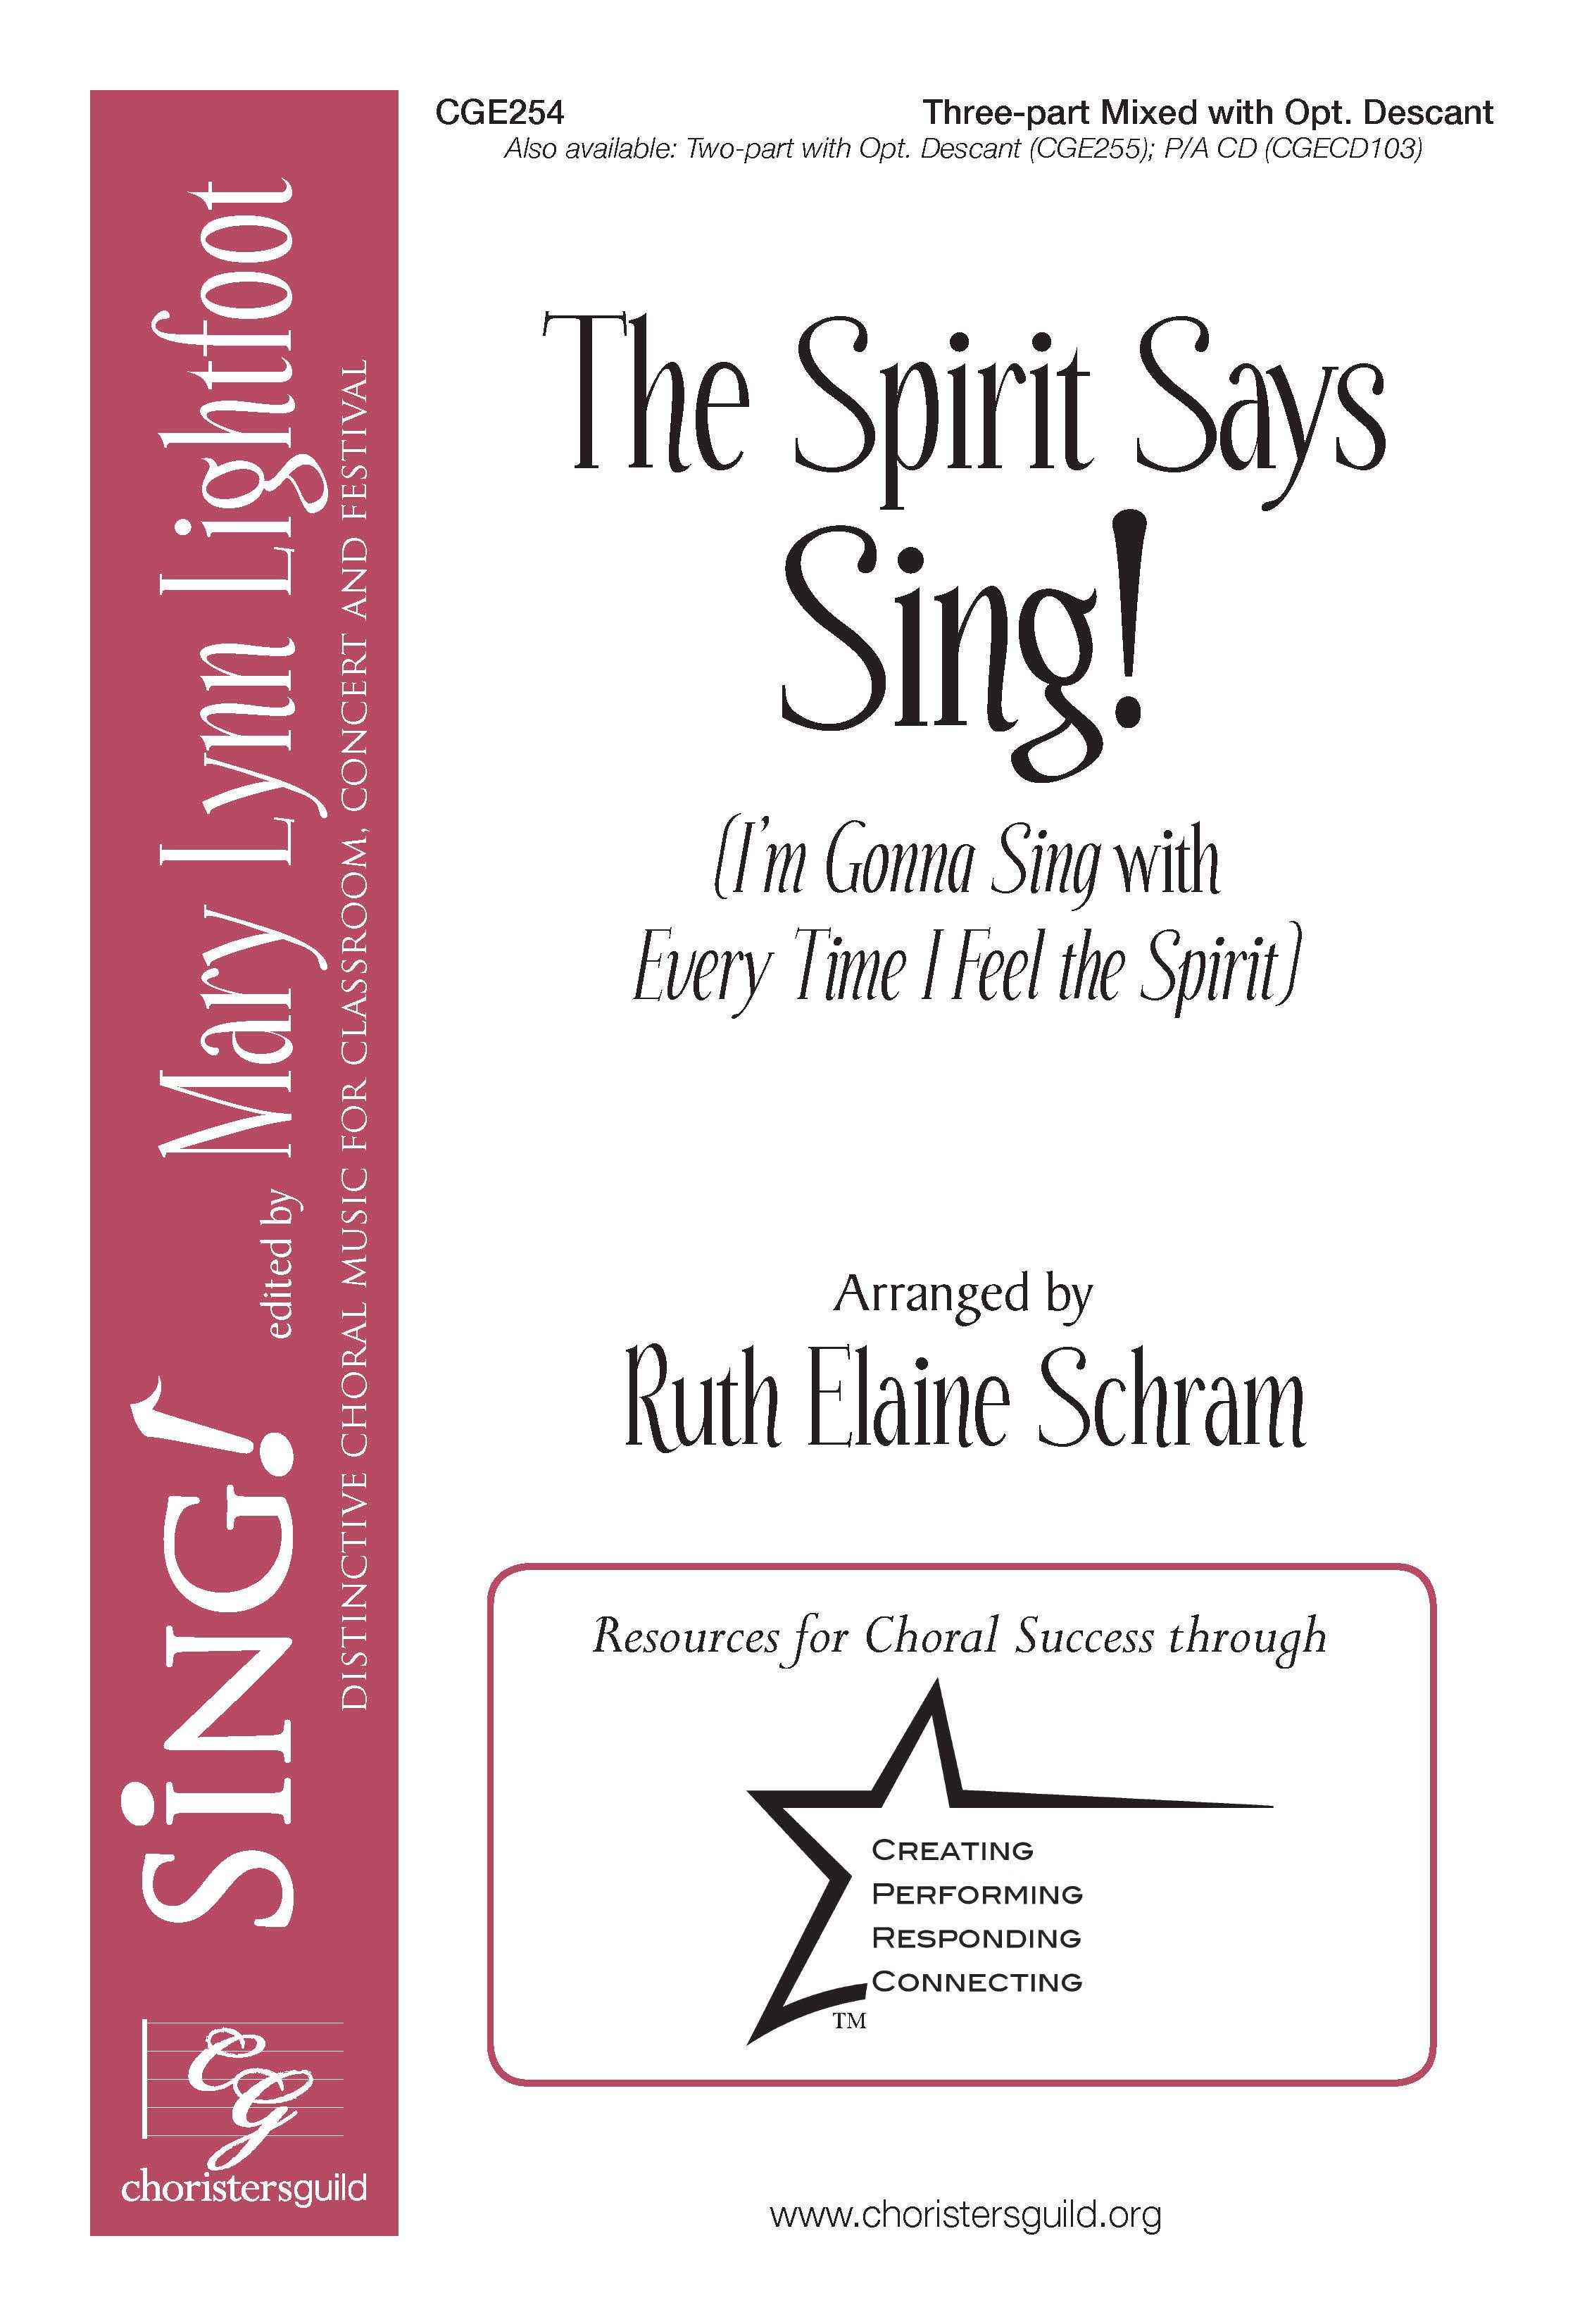 The Spirit Says Sing! Three-part Mixed